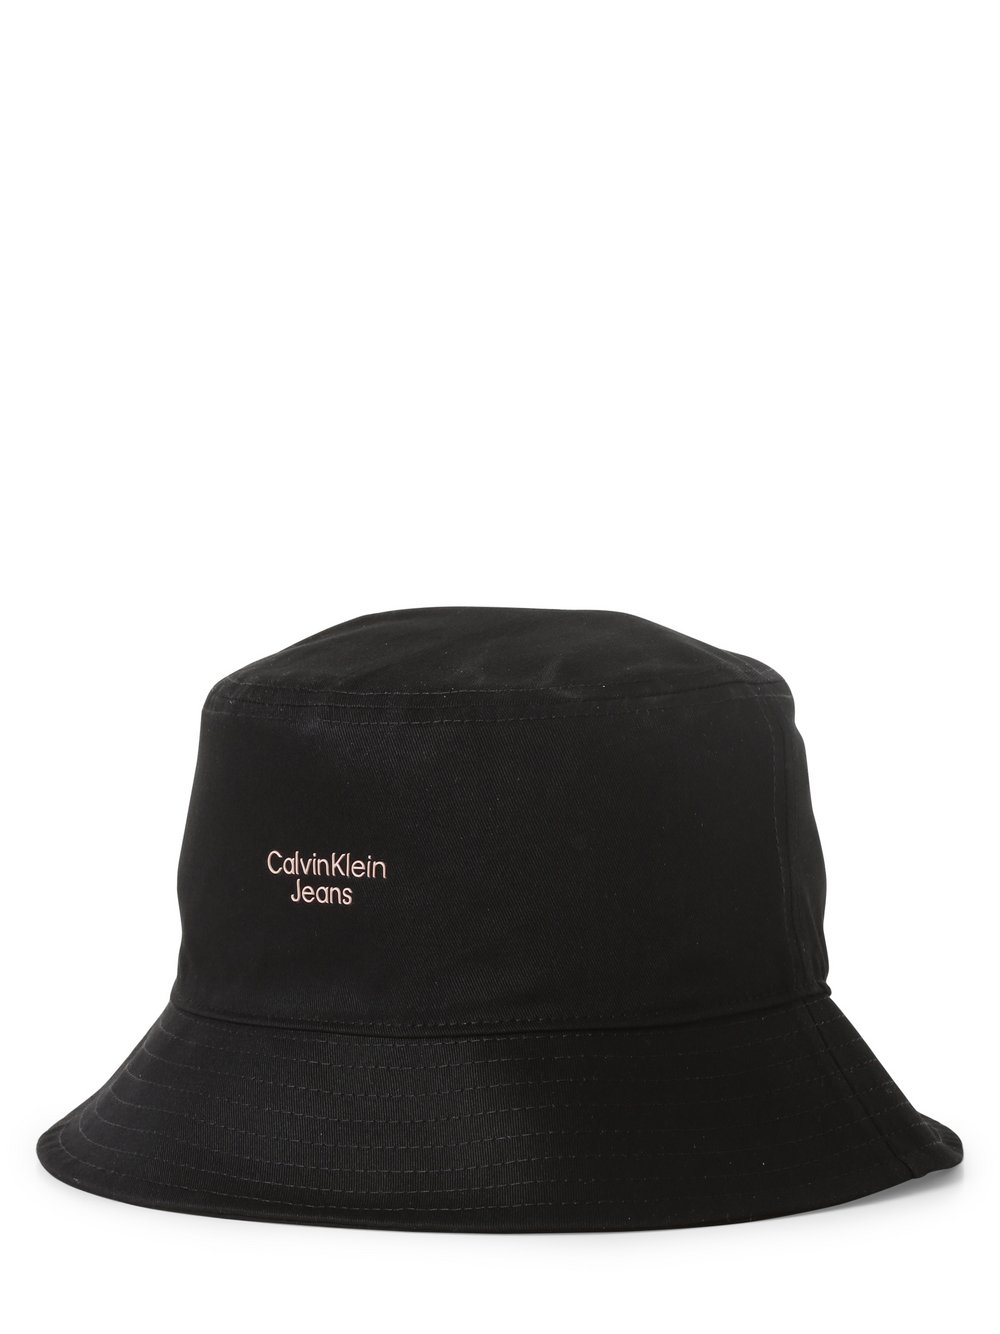 Calvin Klein Jeans - Damski bucket hat, czarny